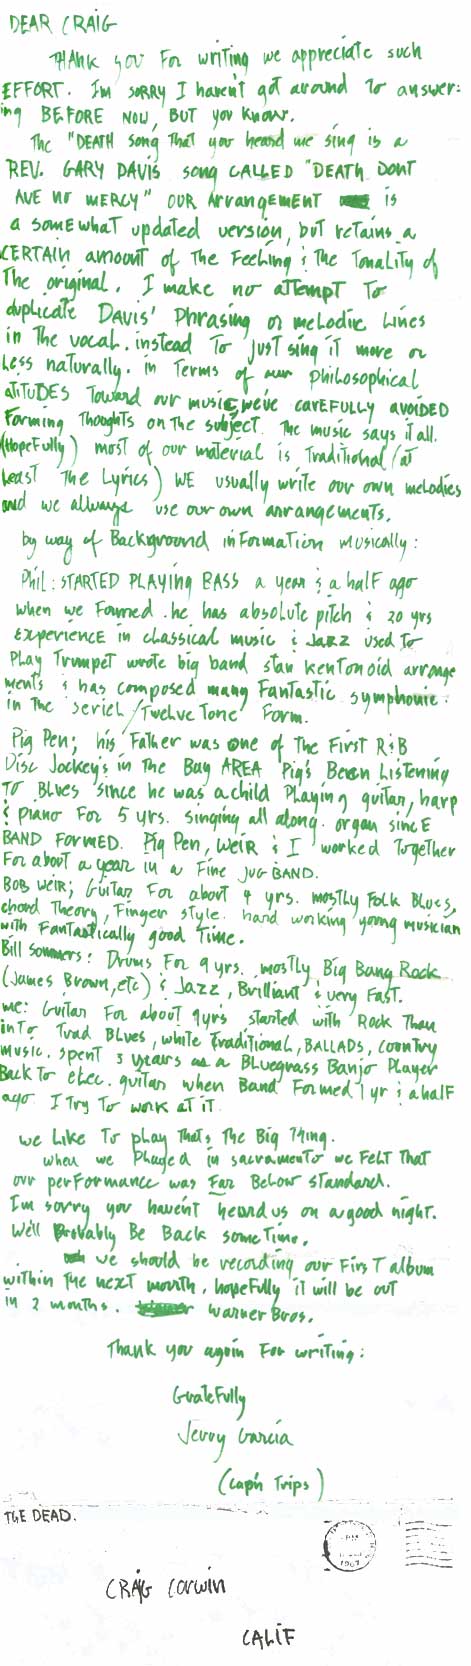 Jerry Garcia's letter to fans | Grateful Dead